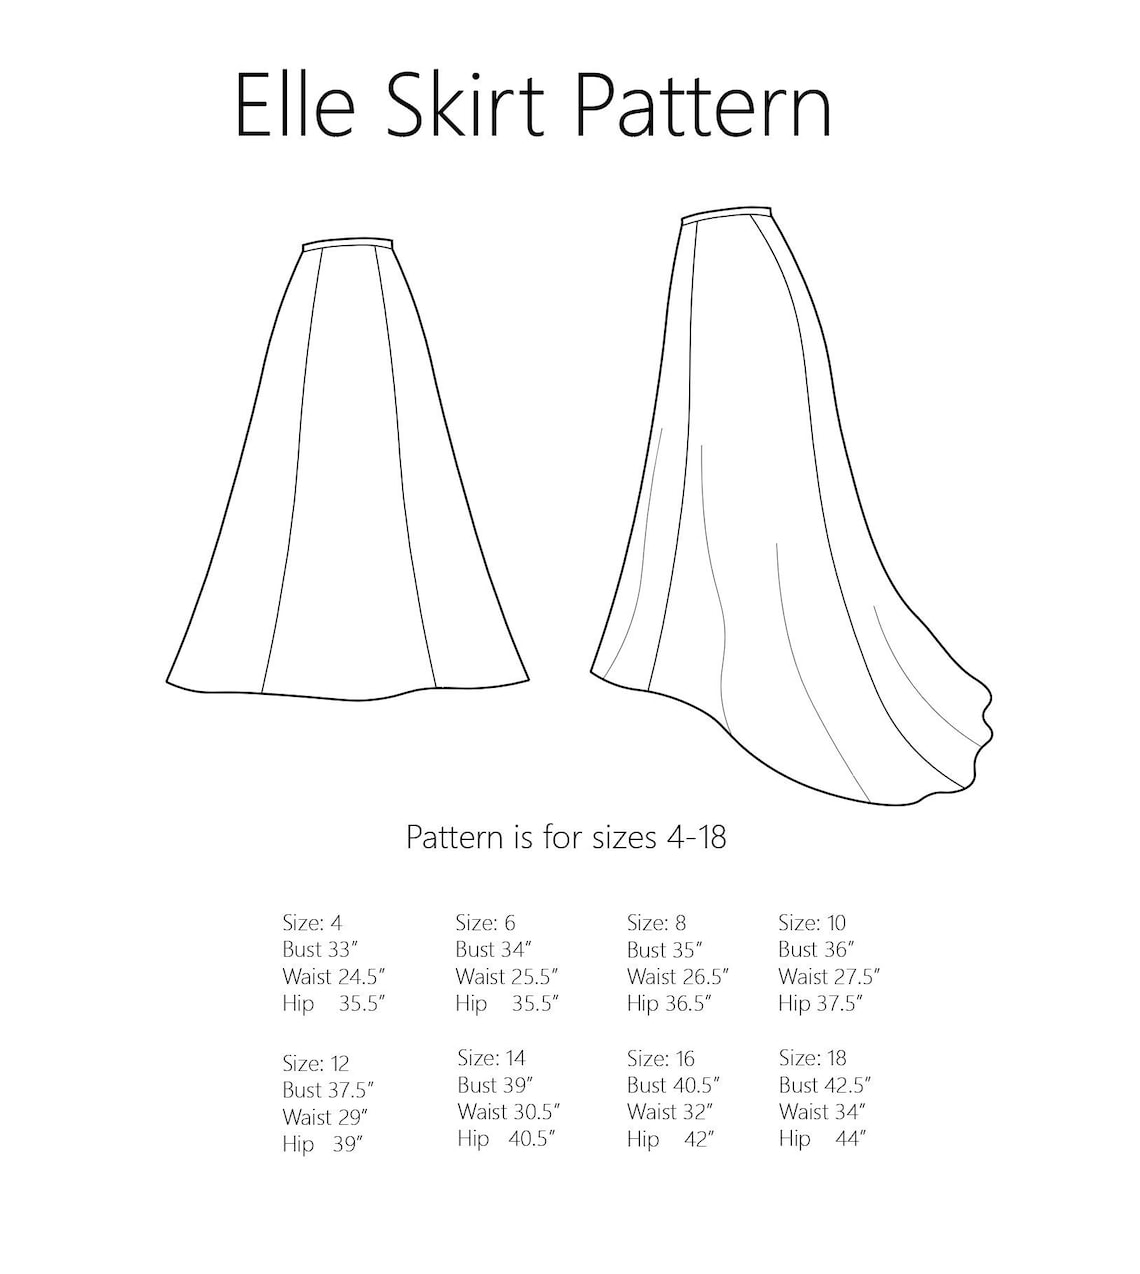 Elle Skirt Pattern Sizes 4-18 aurora Wedding Dress Inspired - Etsy